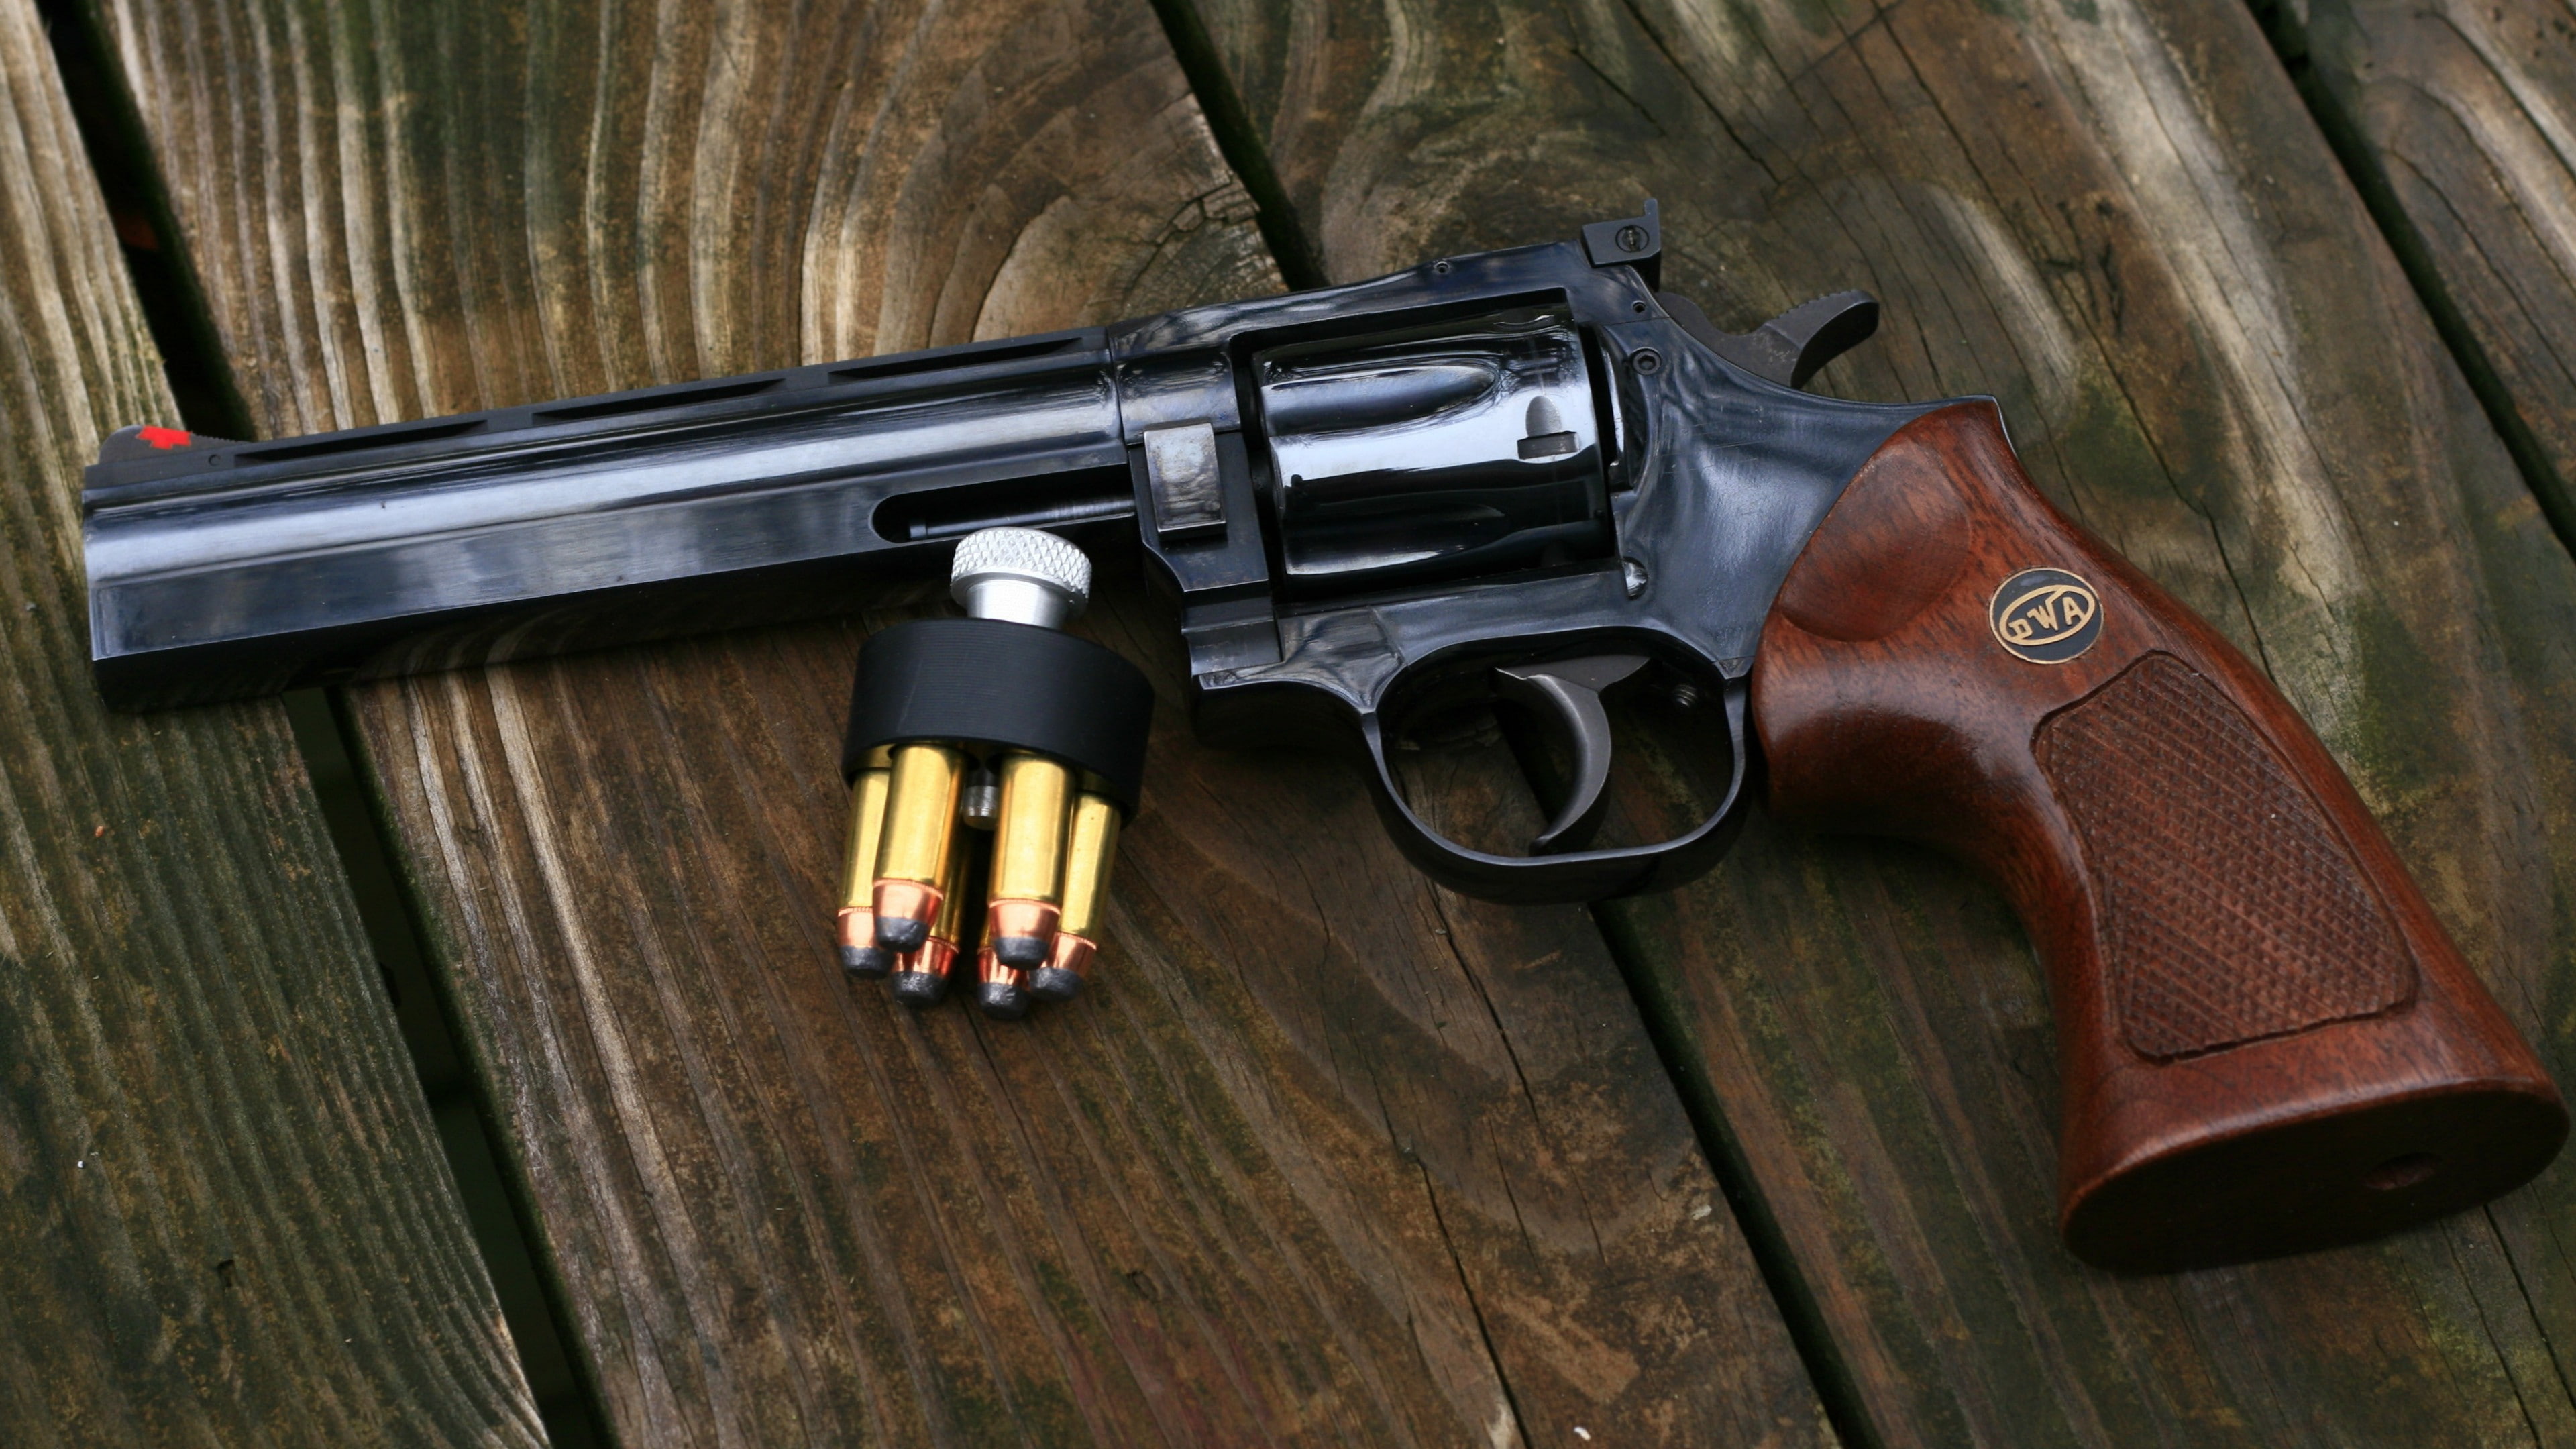 black and brown revolver gun on brown wood planks, Dan Wesson